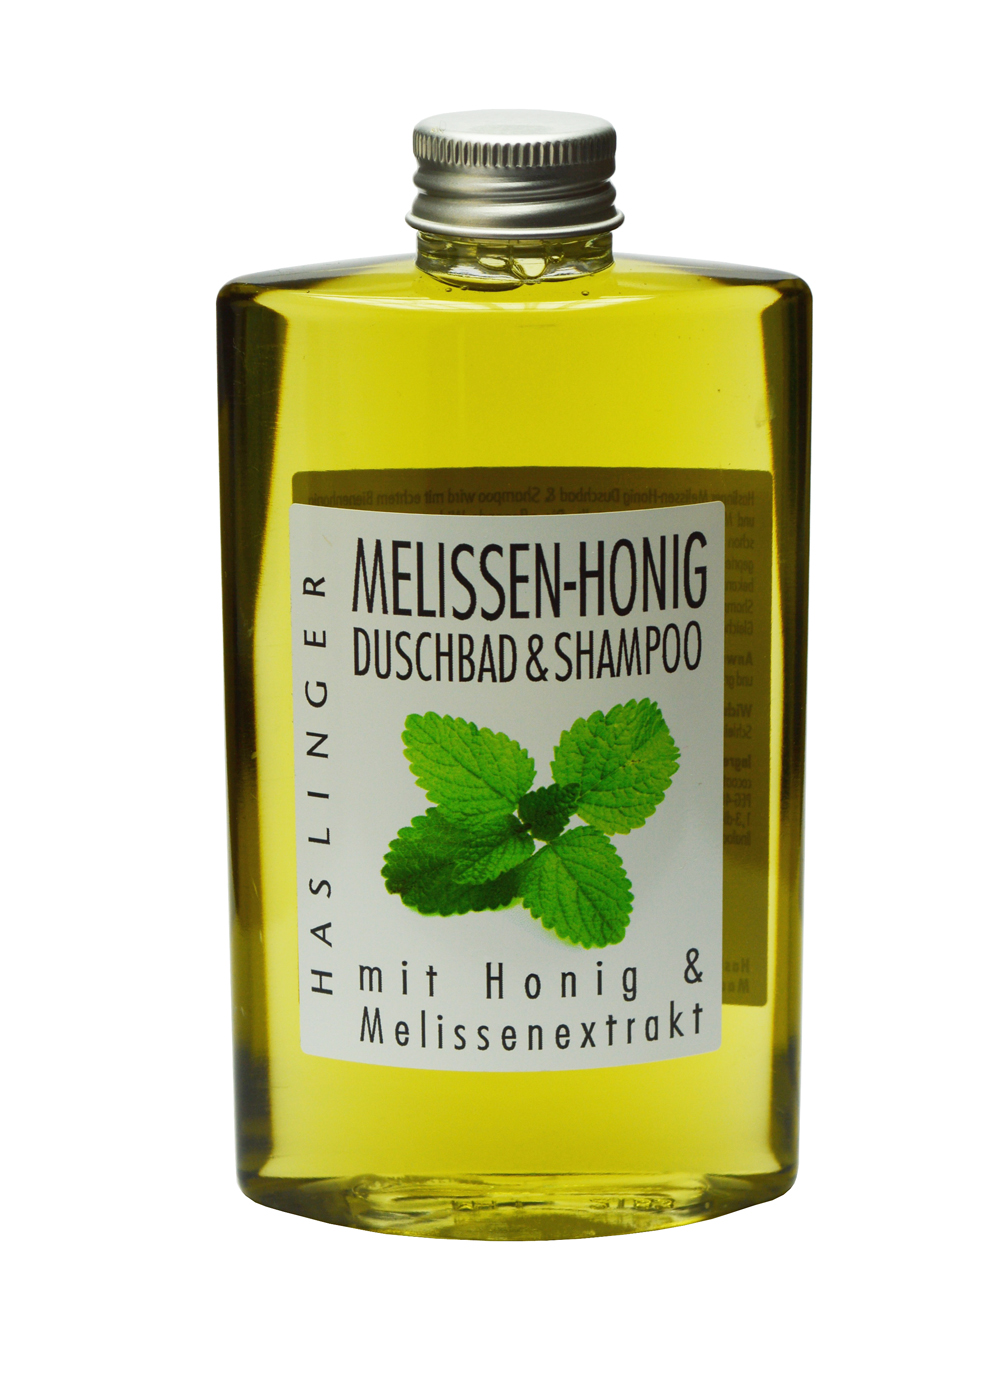 Haslinger Melissen-Honig Shampoo & Duschbad